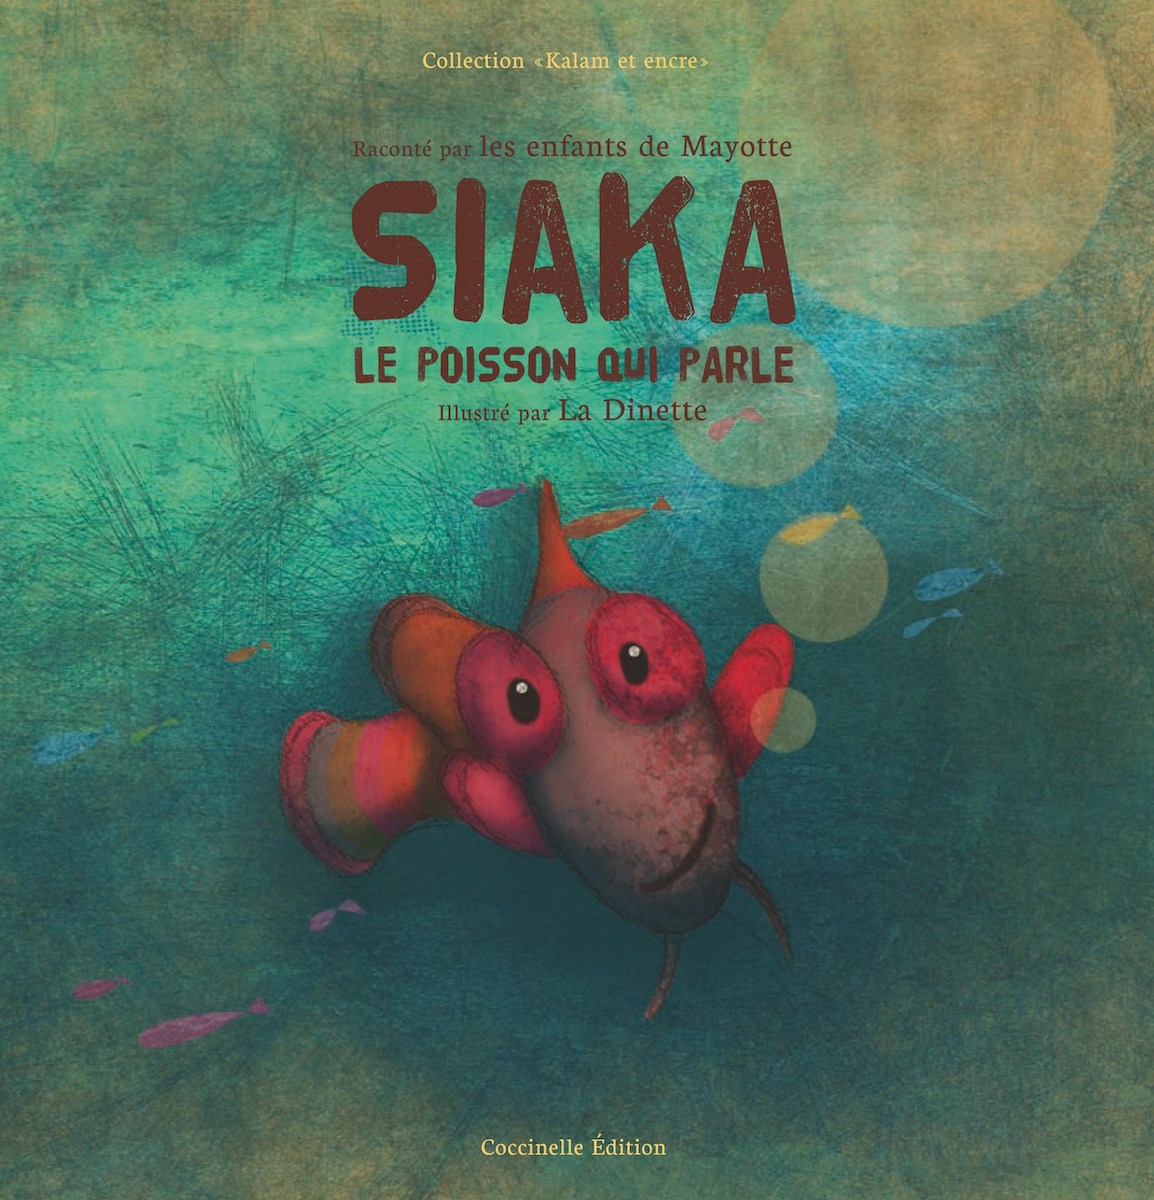 Siaka, le poisson qui parle